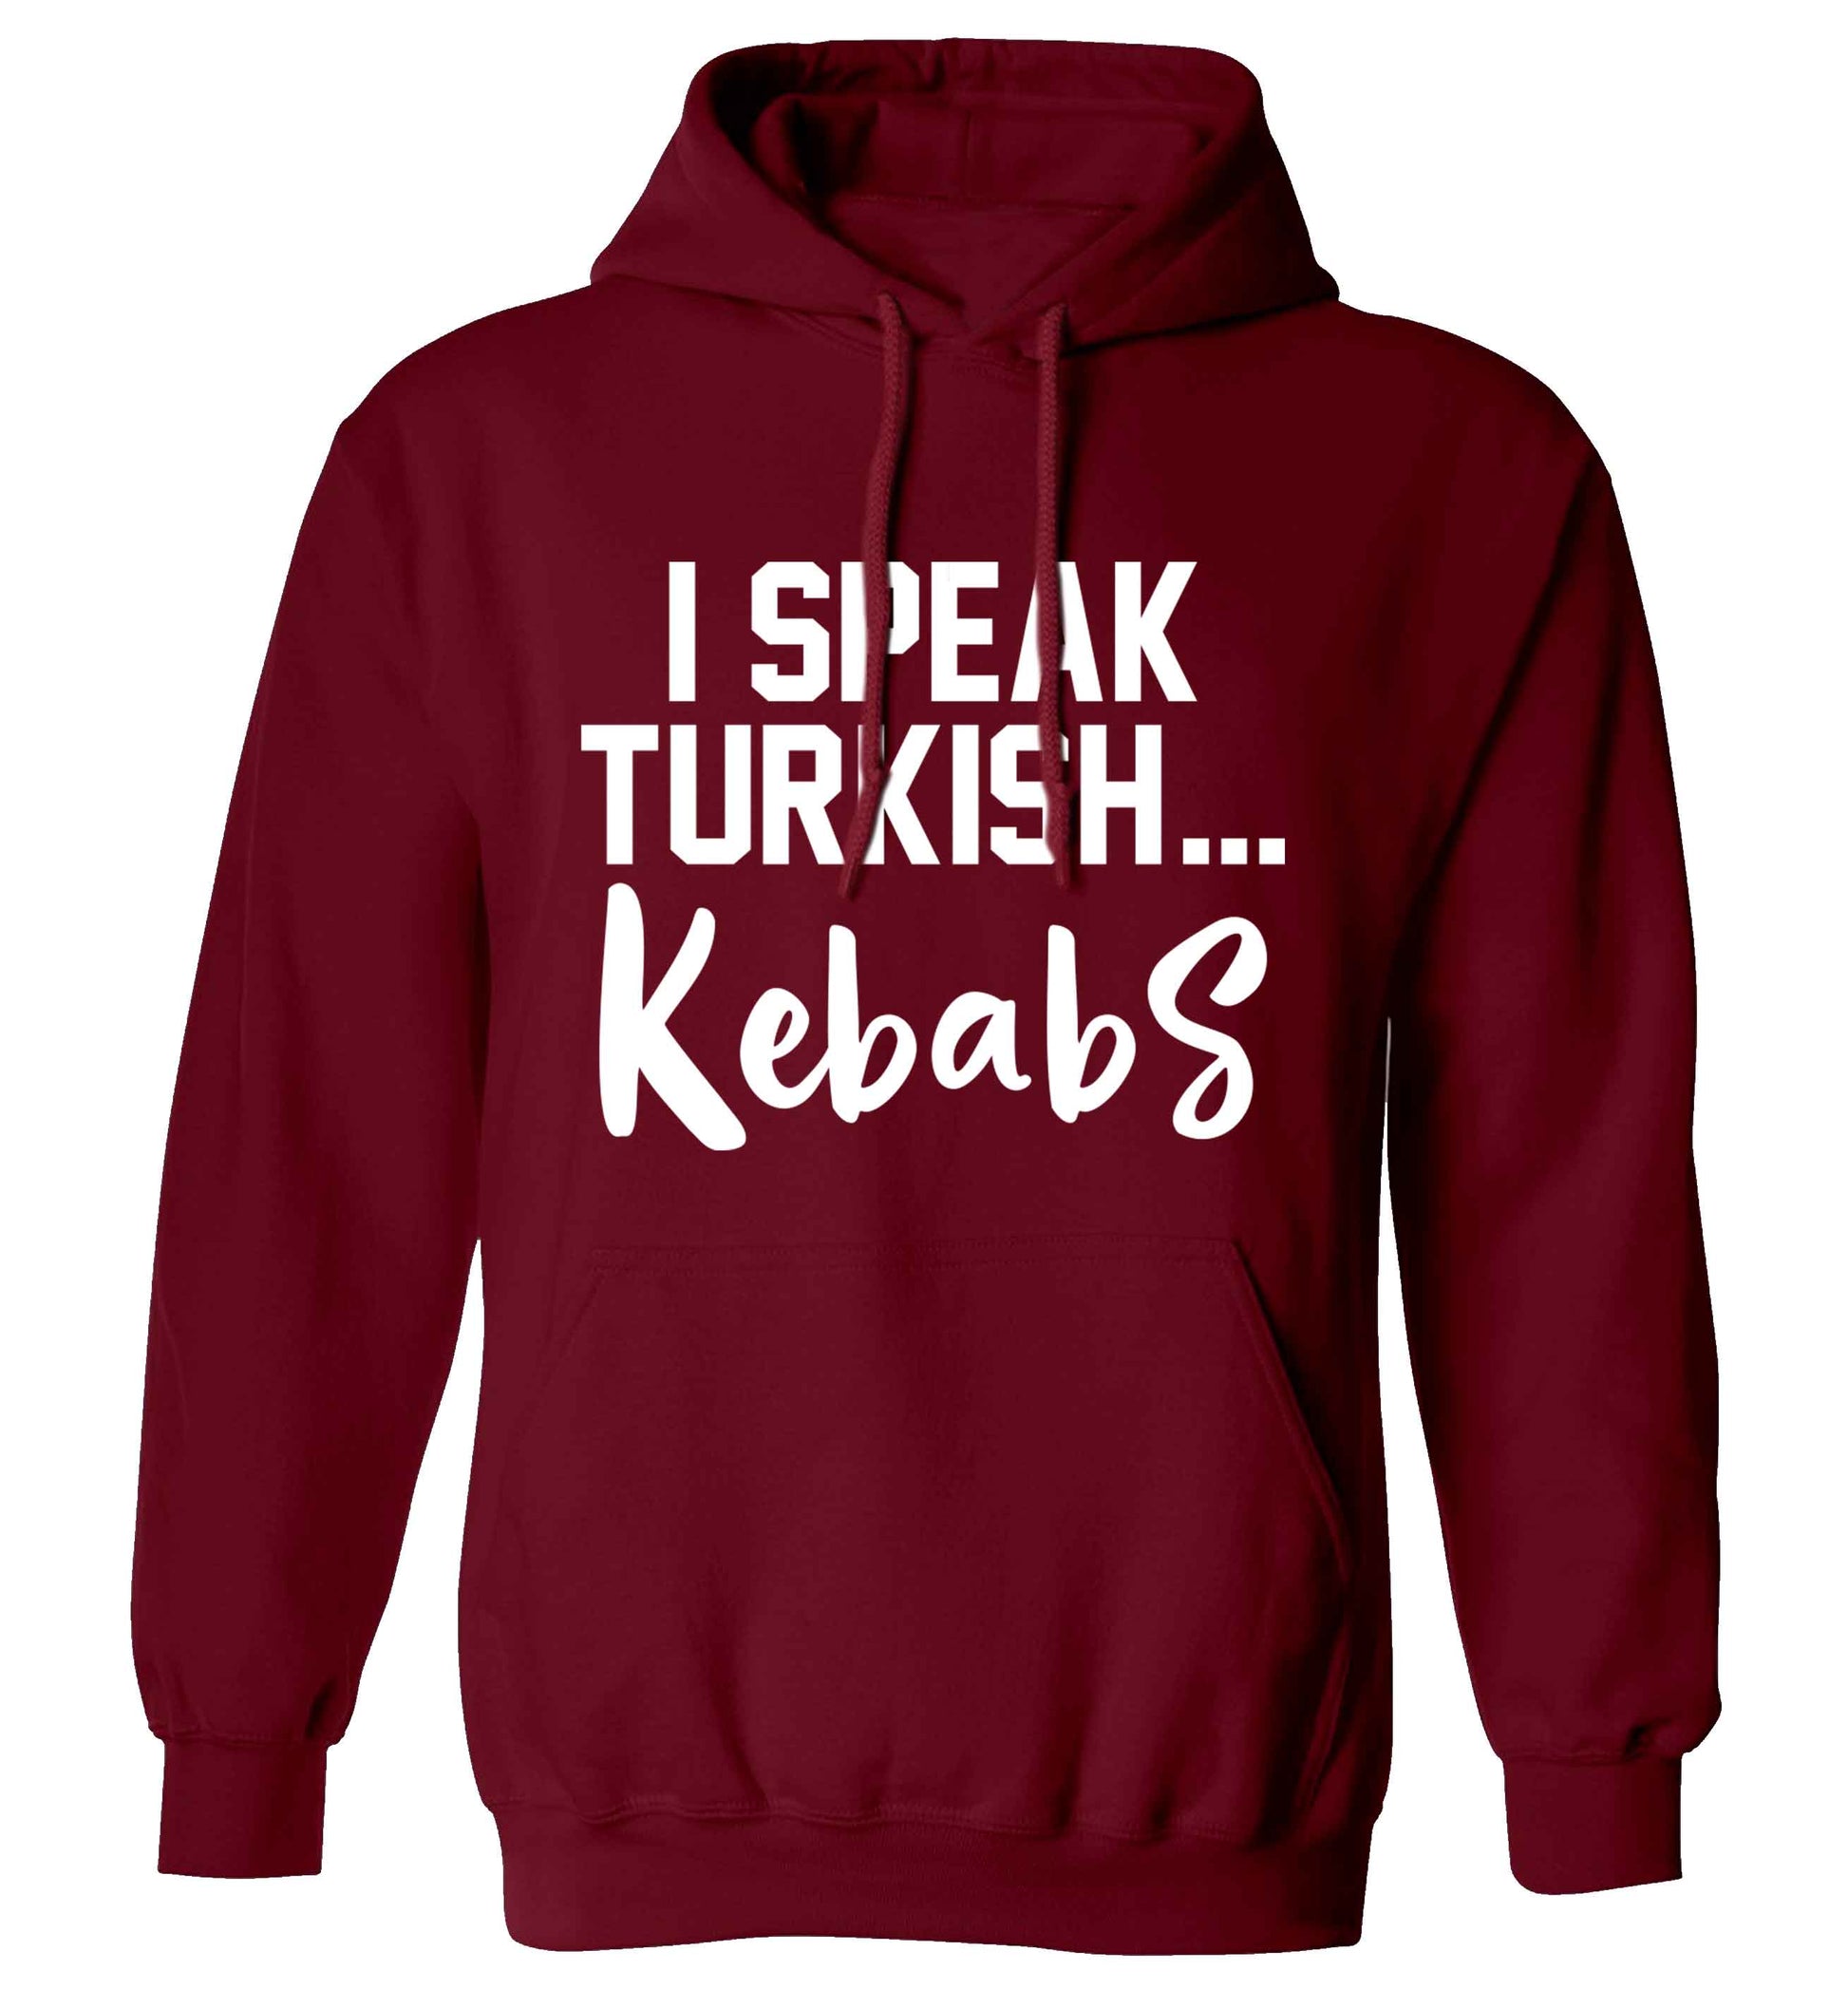 I speak Turkish...kebabs adults unisex maroon hoodie 2XL